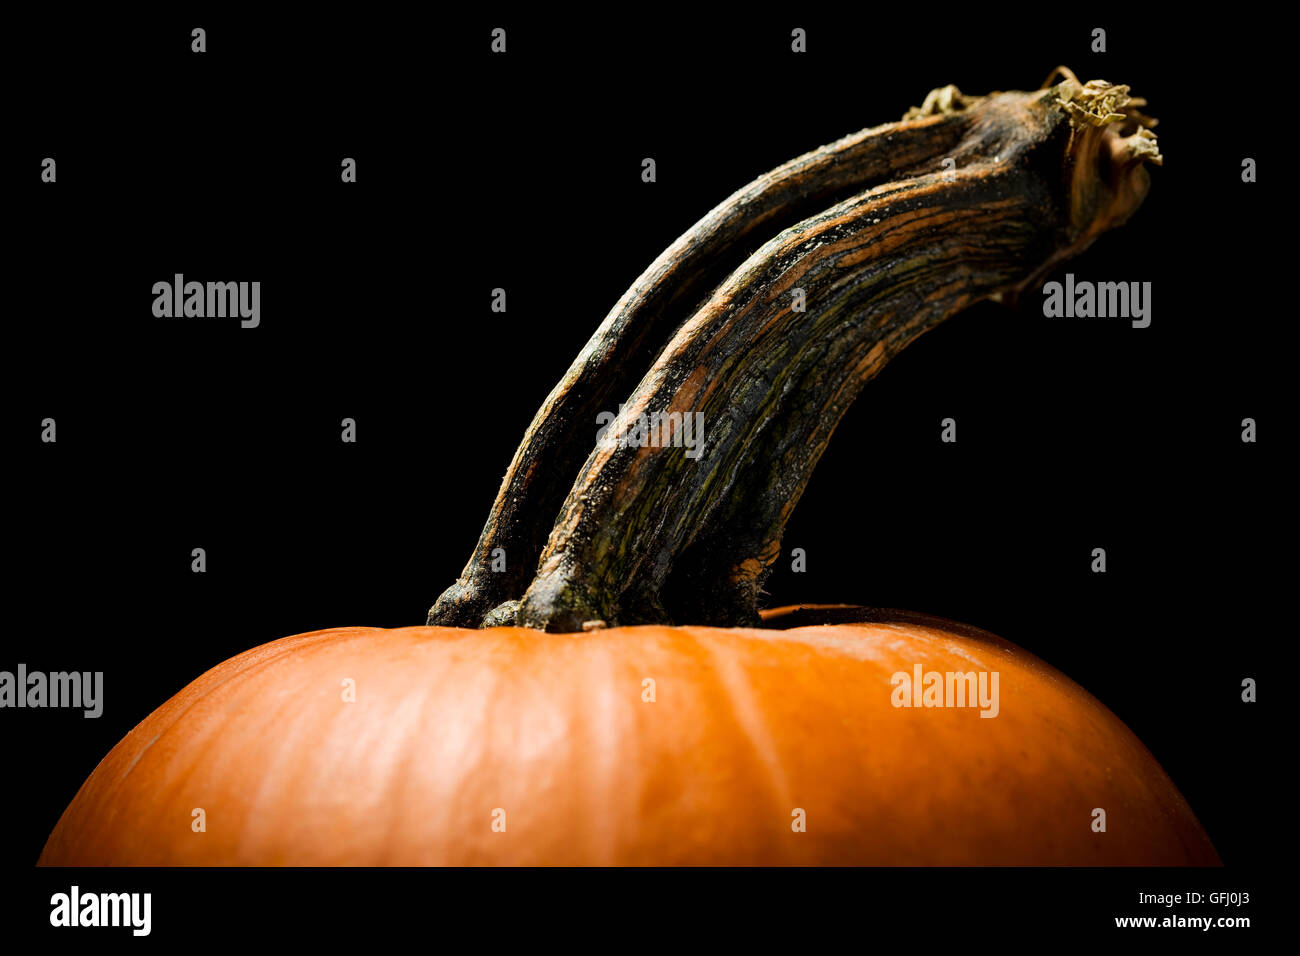 Halloween pumpkin dramatically lit on black background. Stock Photo